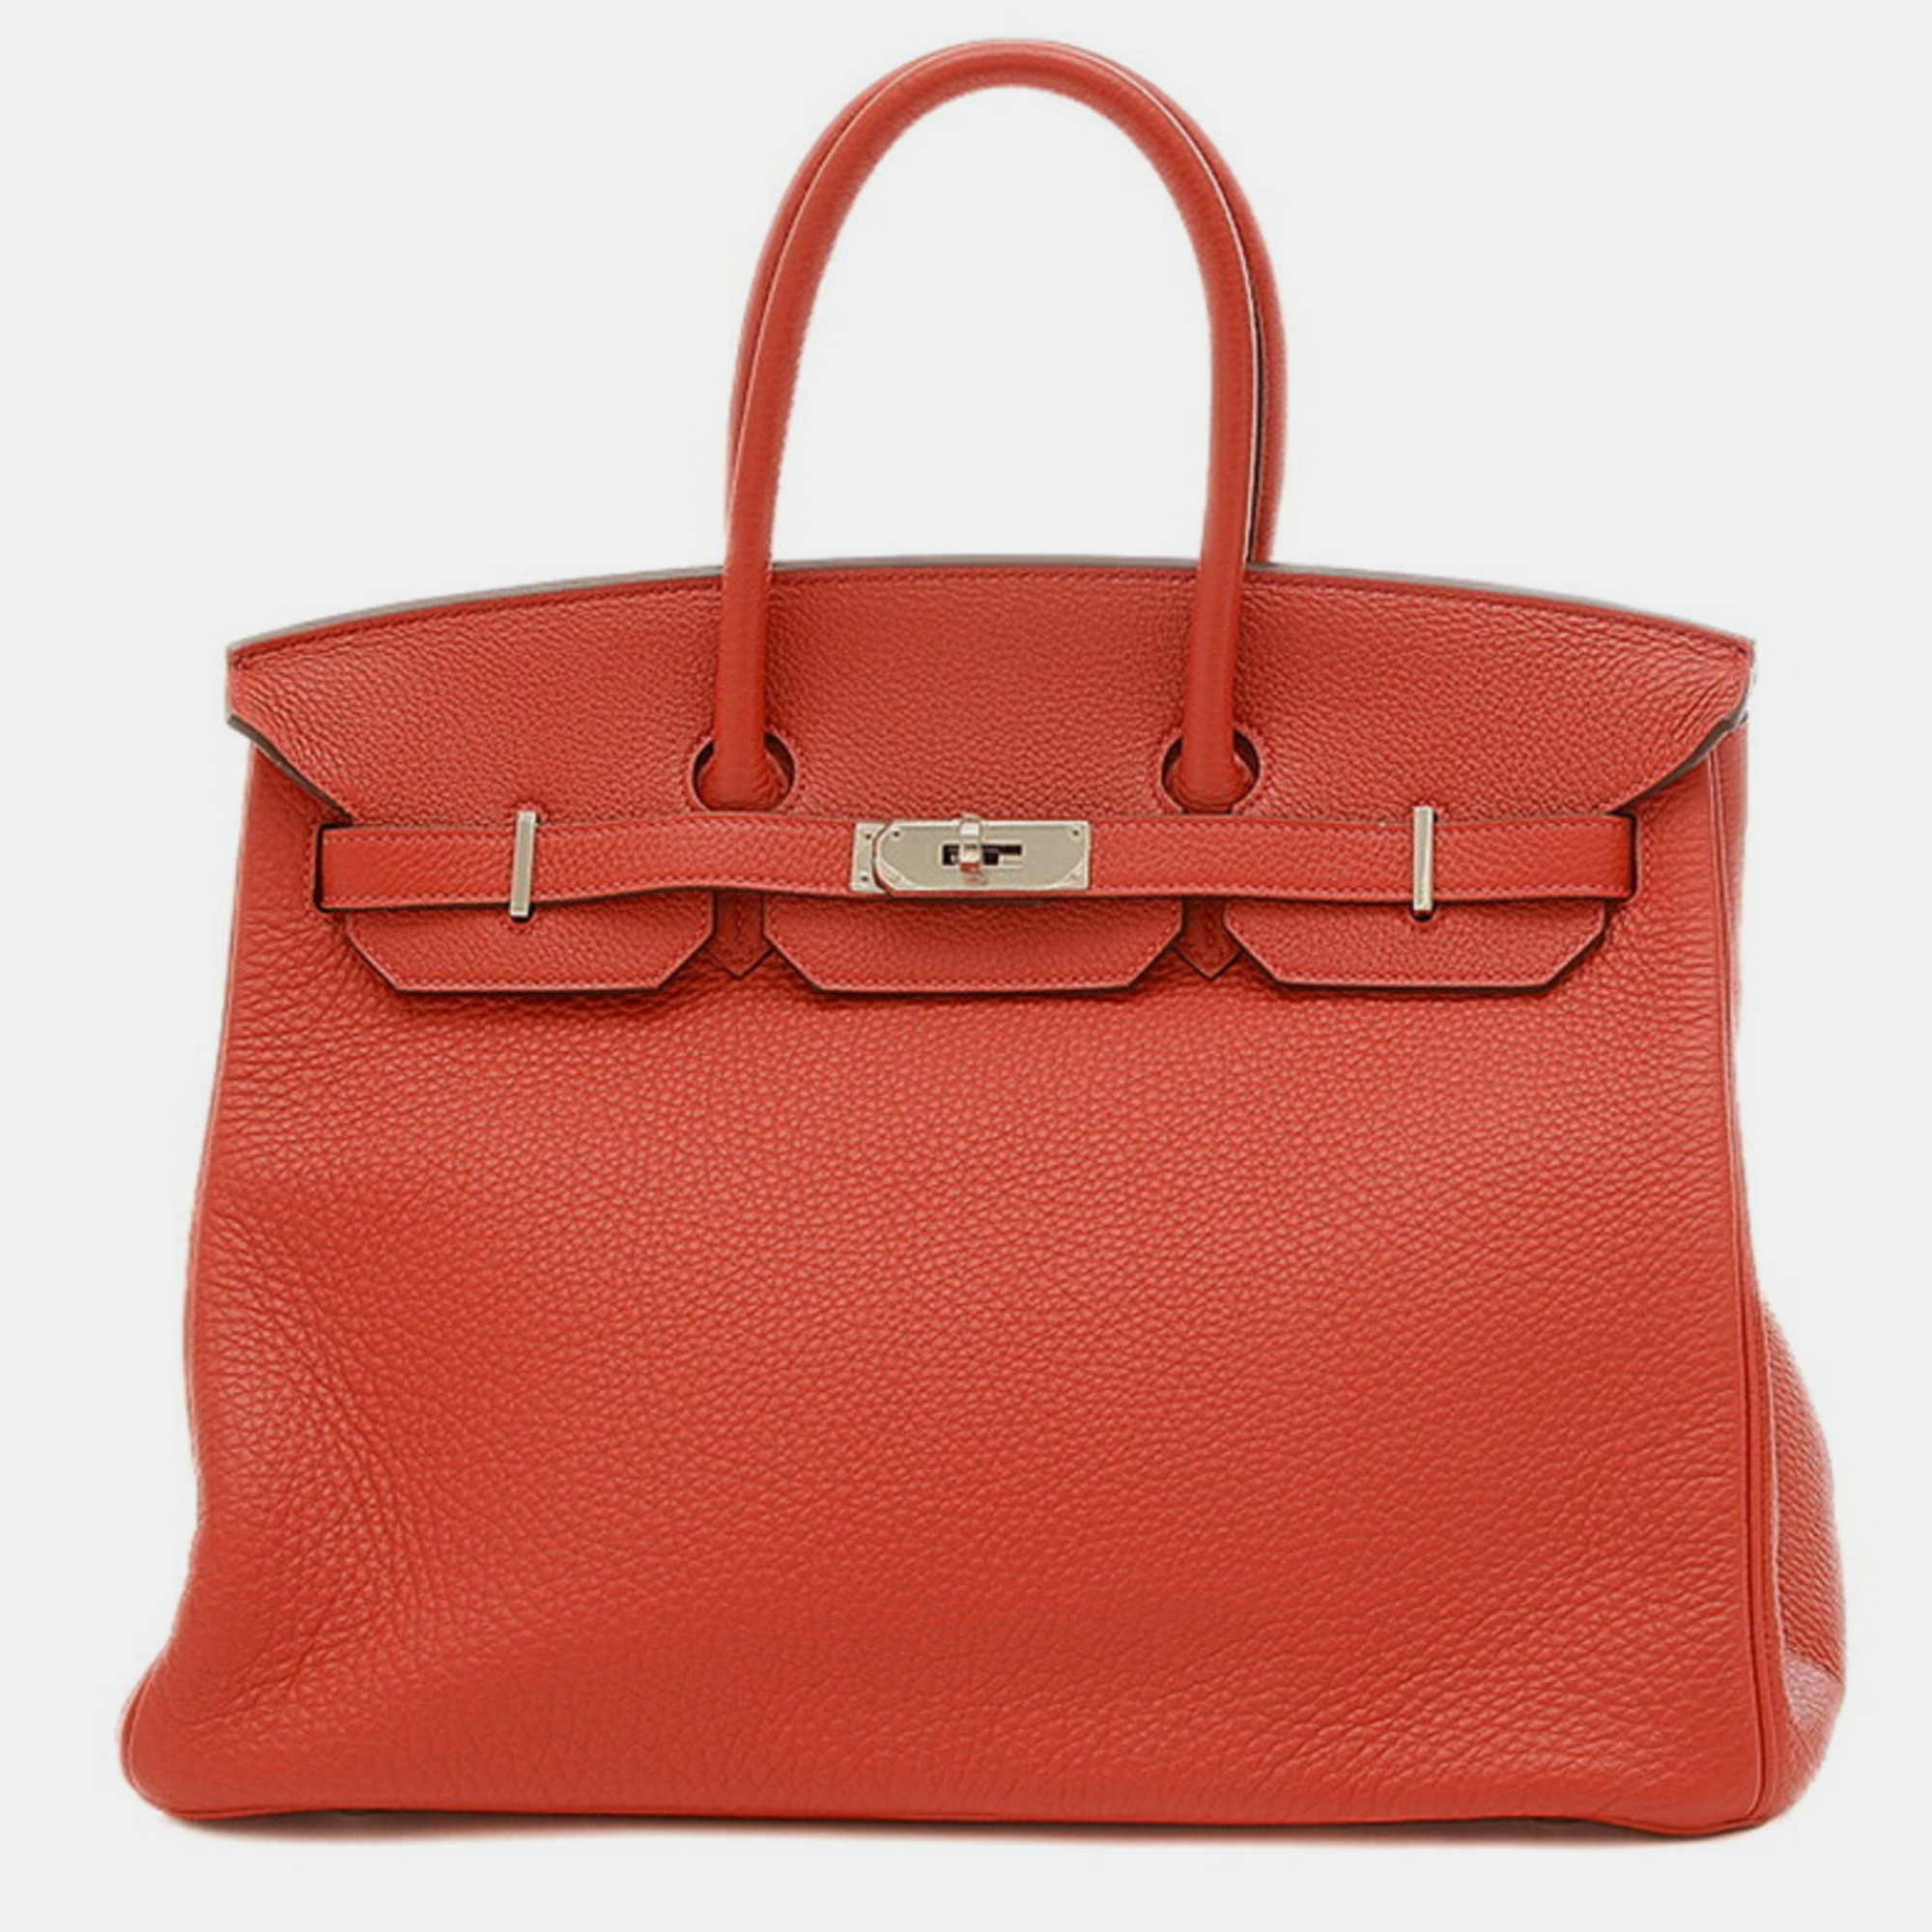 

Hermes Rouge Kazak Togo Birkin 35 Handbag, Red